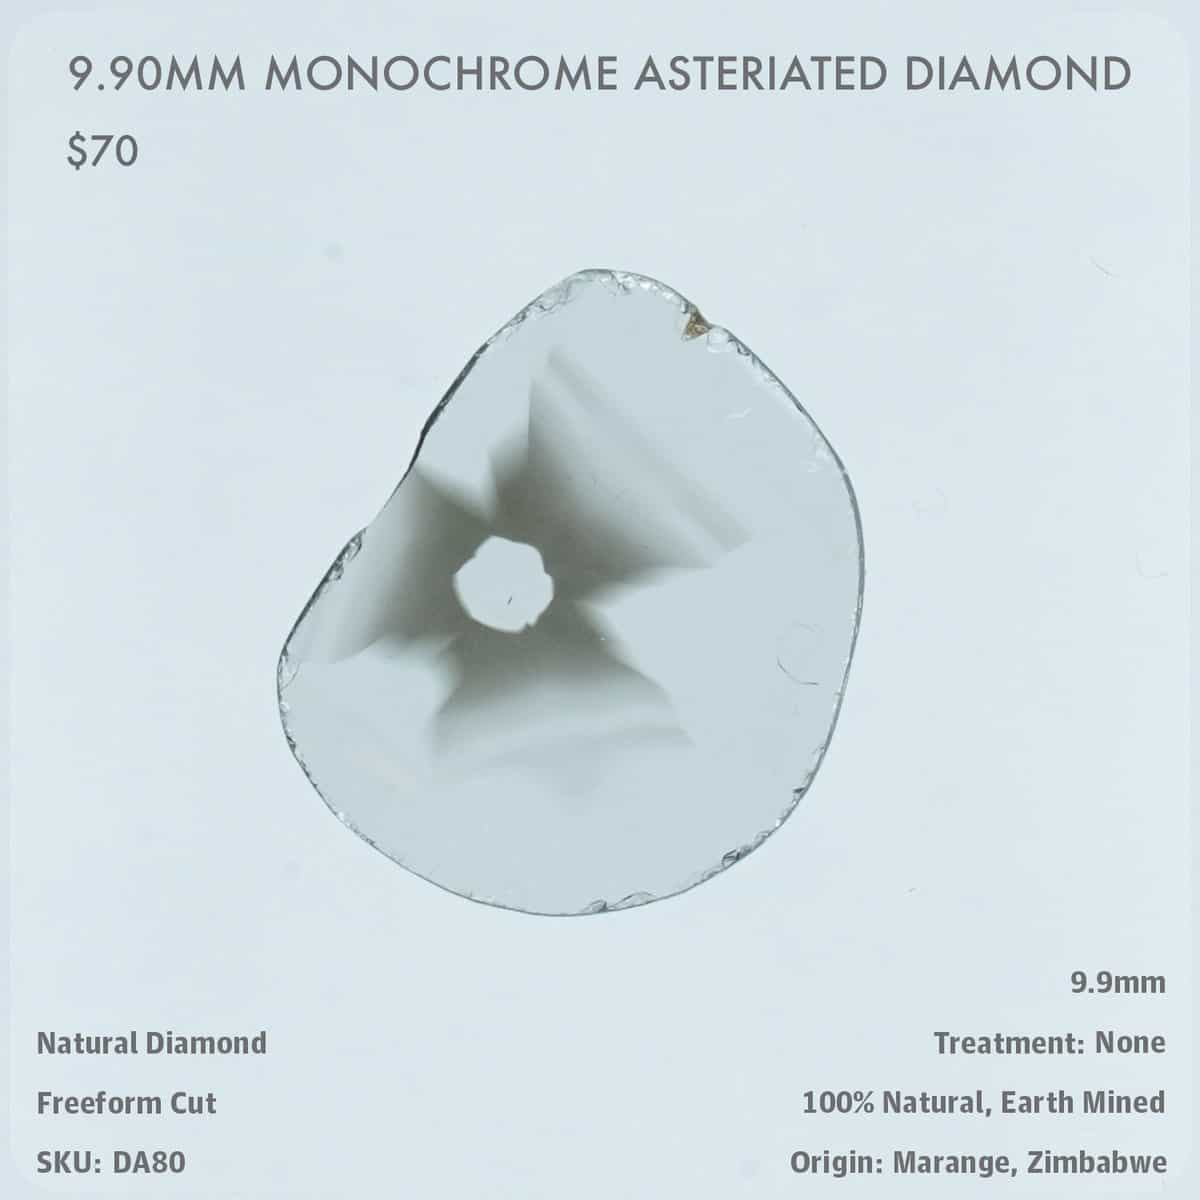 9.90mm Monochrome Asteriated Diamond